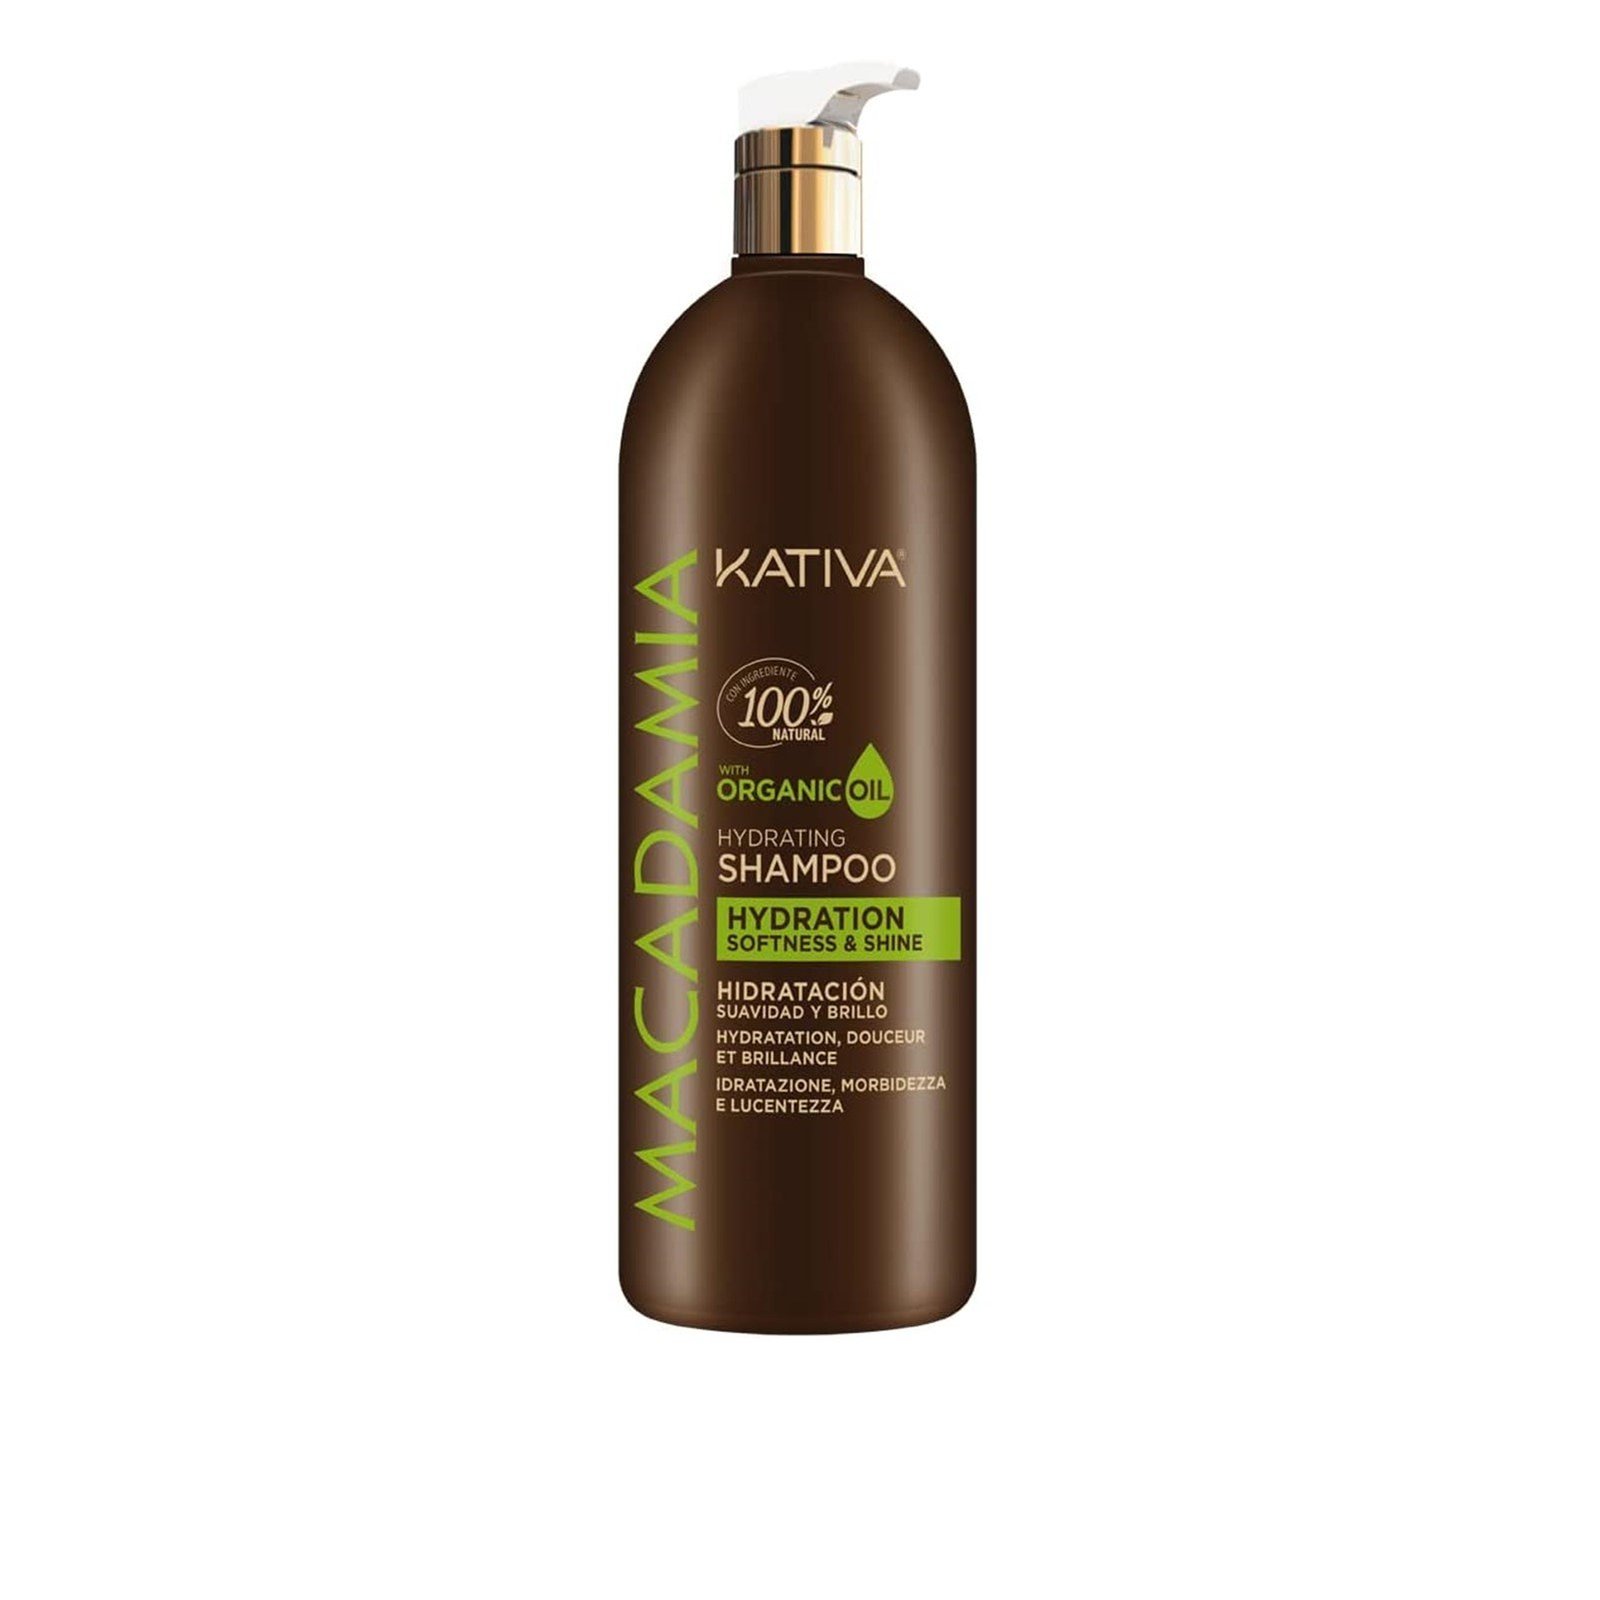 Kativa Macadamia Hydration Softness & Shine Shampoo 1L (33.8 fl oz)